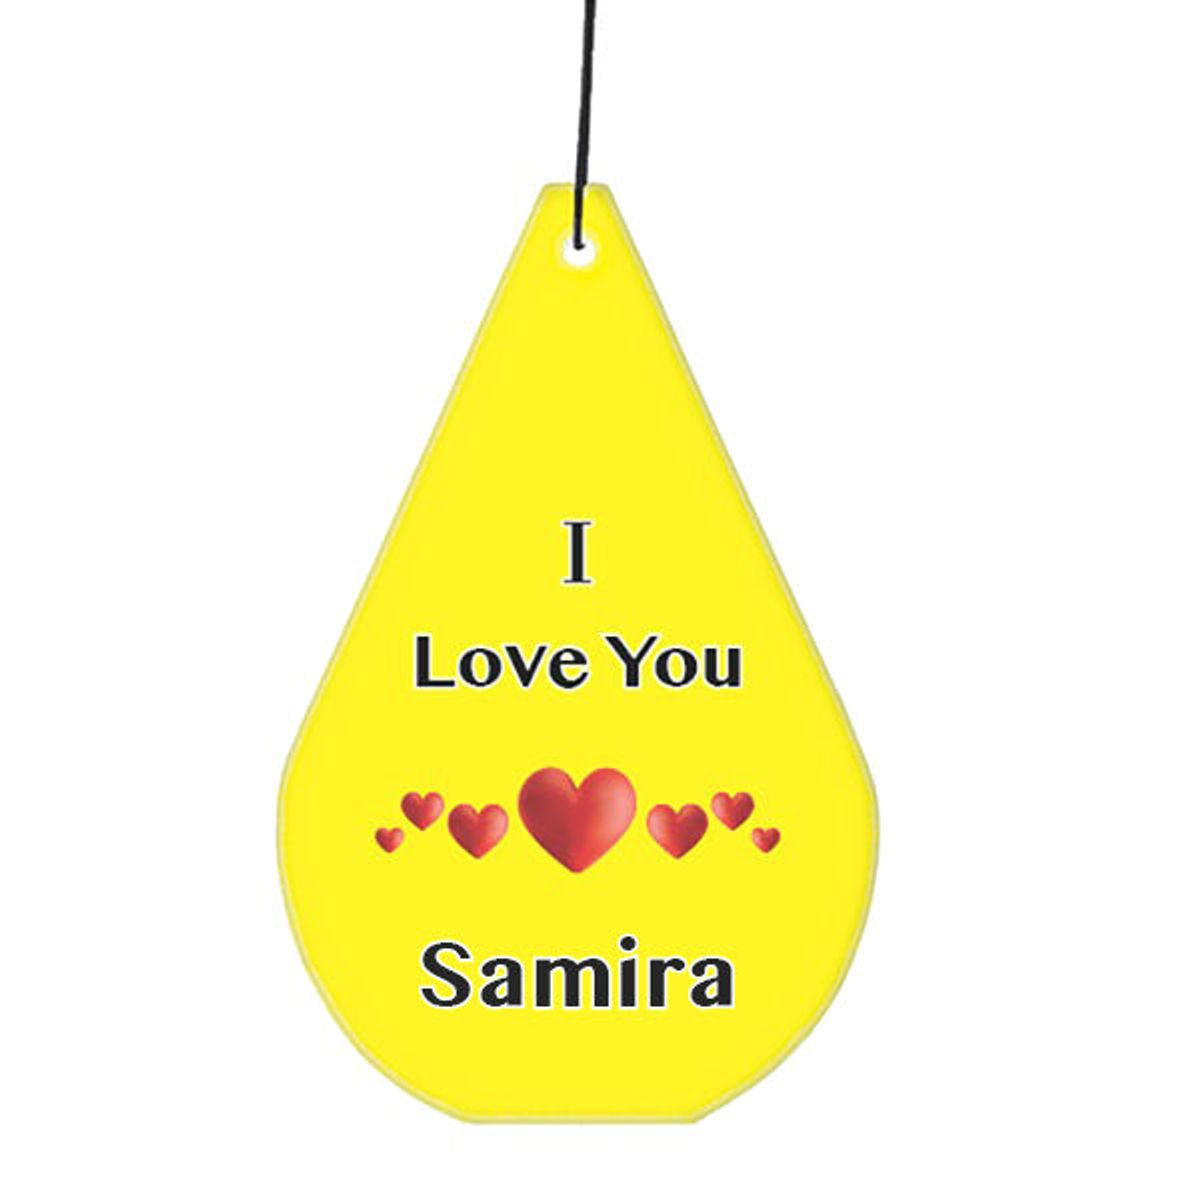 Samira A Modifier Le Menu Du Jour Samira